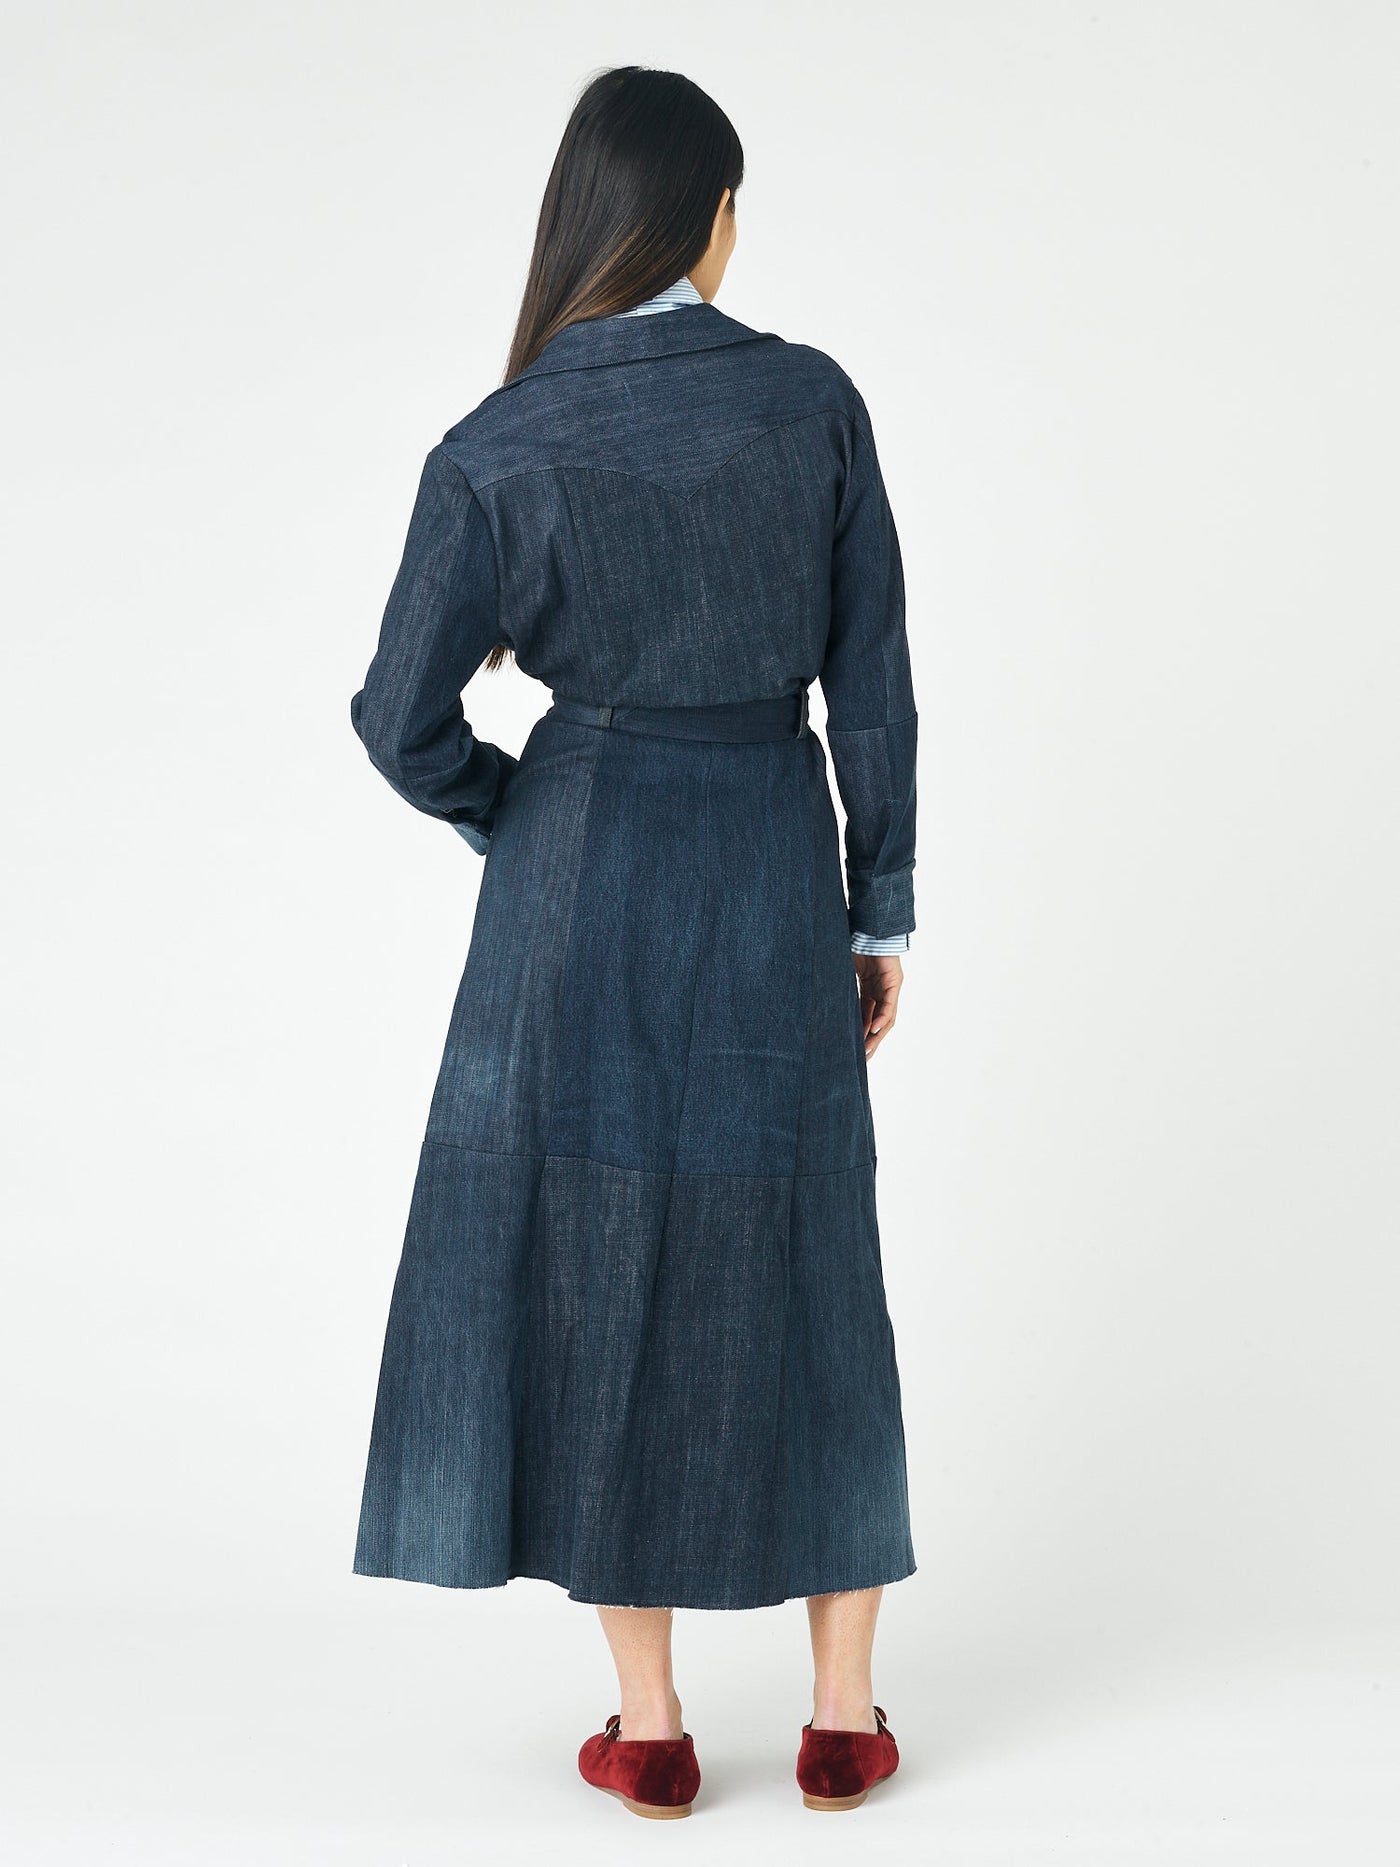 ESPIRIT Women's Long Sleeve Denim Shirt Dress Knee Length in Mid & Light  Blue | eBay